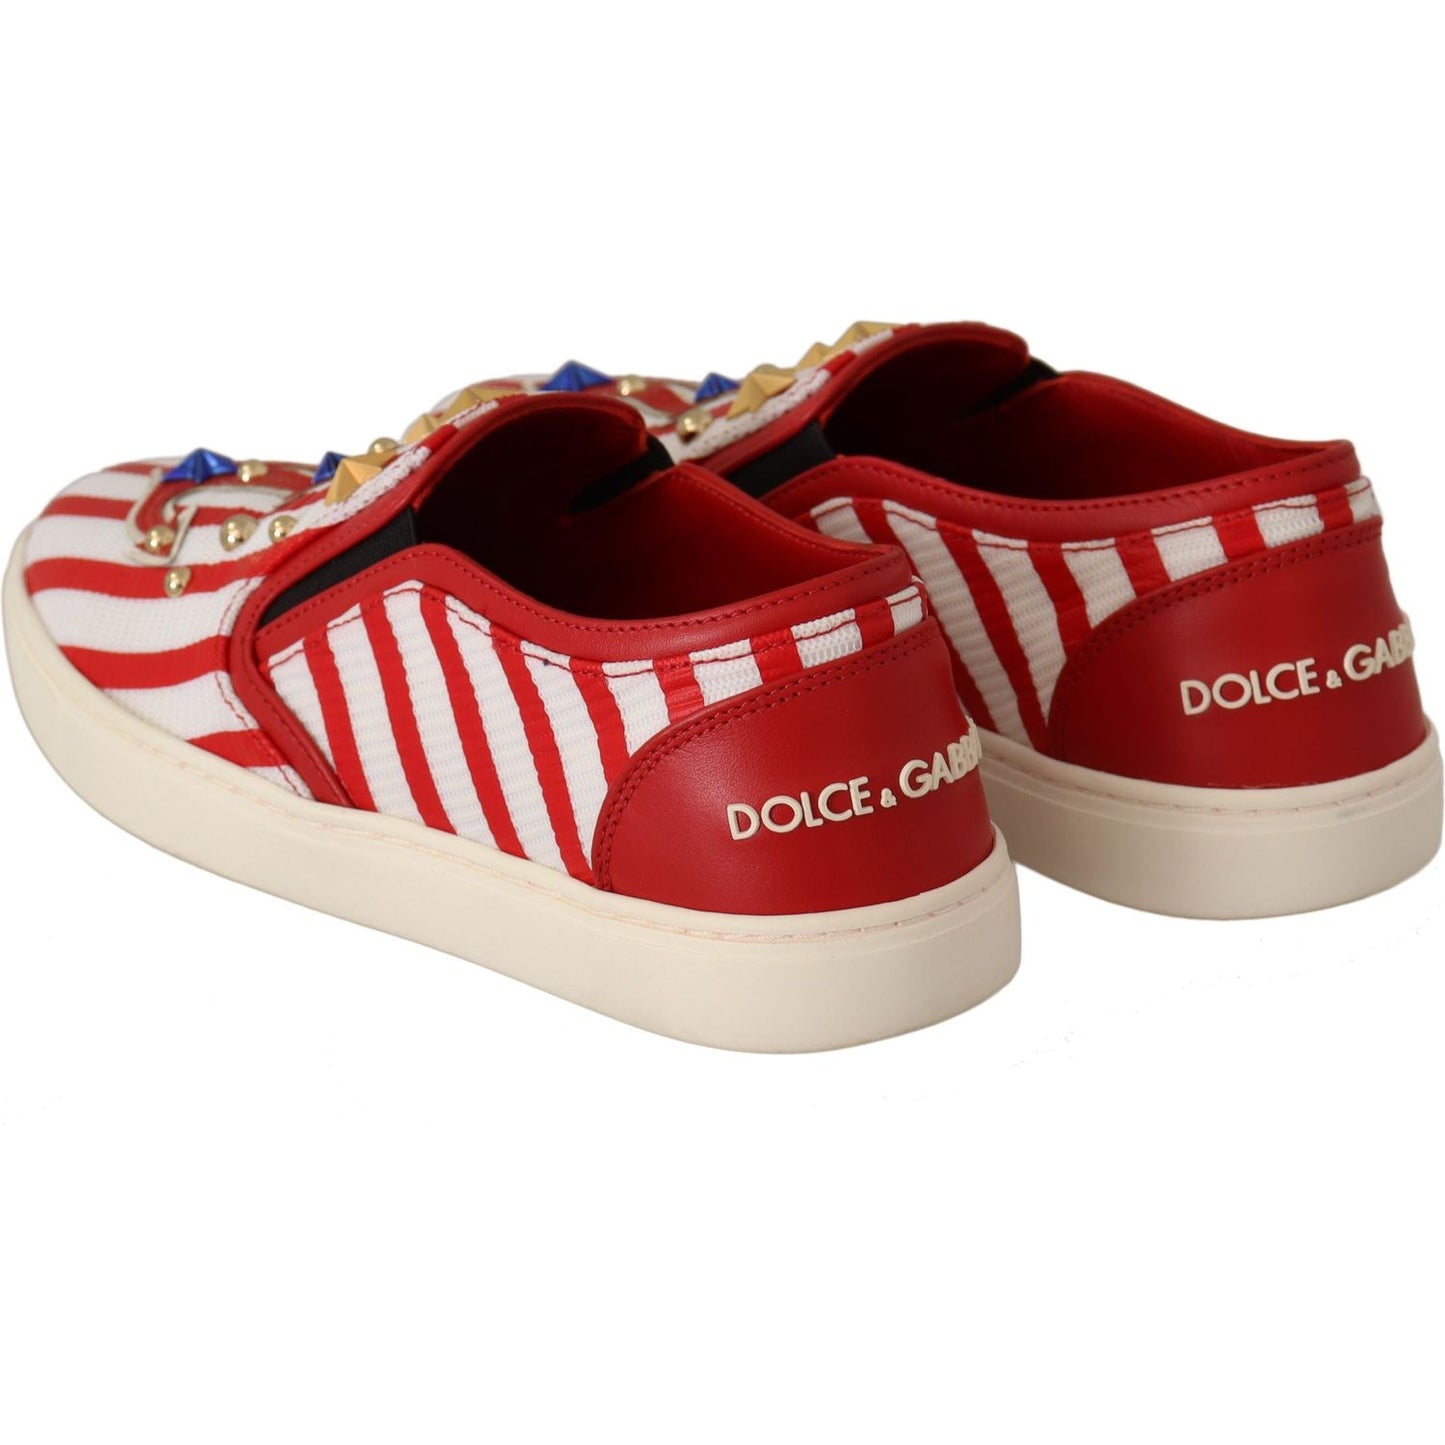 Dolce & Gabbana Stripe Print Studded Loafers WOMAN LOAFERS red-white-anchor-studded-loafers-shoes